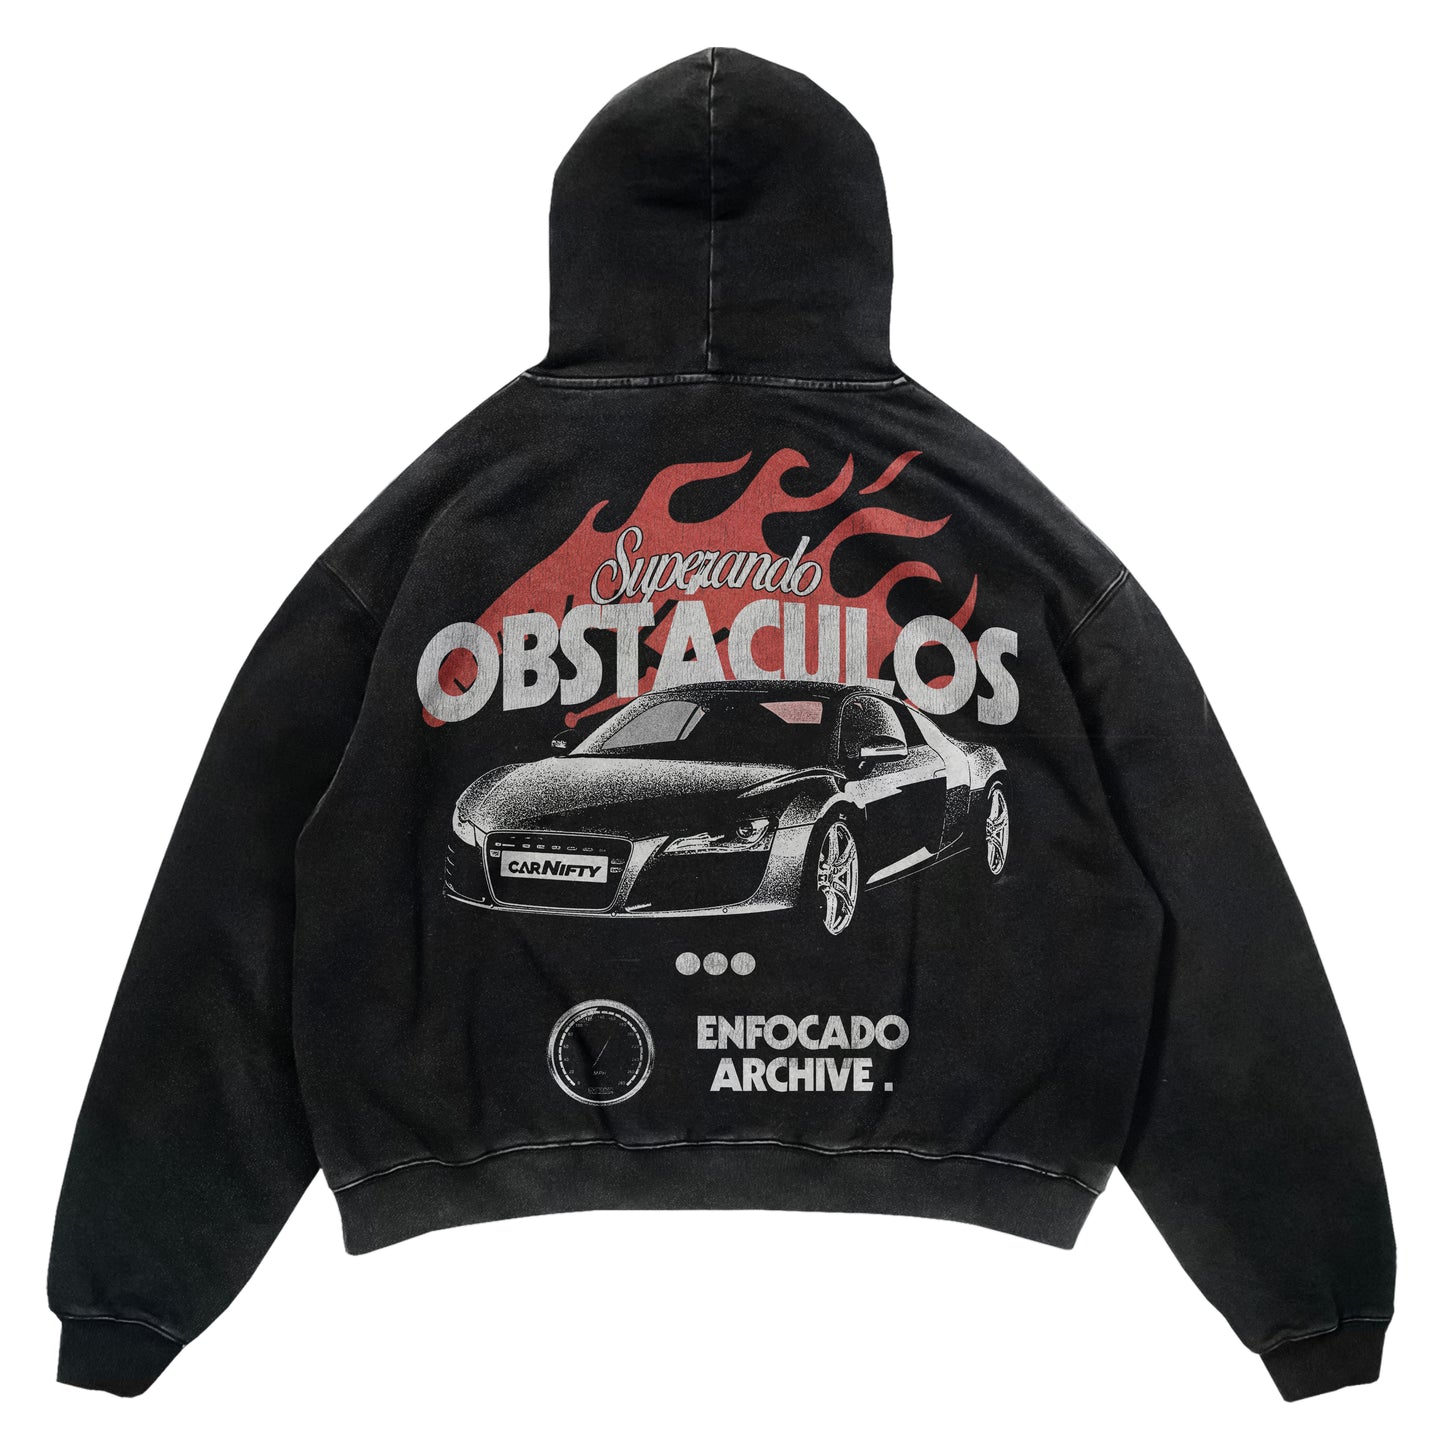 Overcome obstacles / Superando obstáculos hoodie